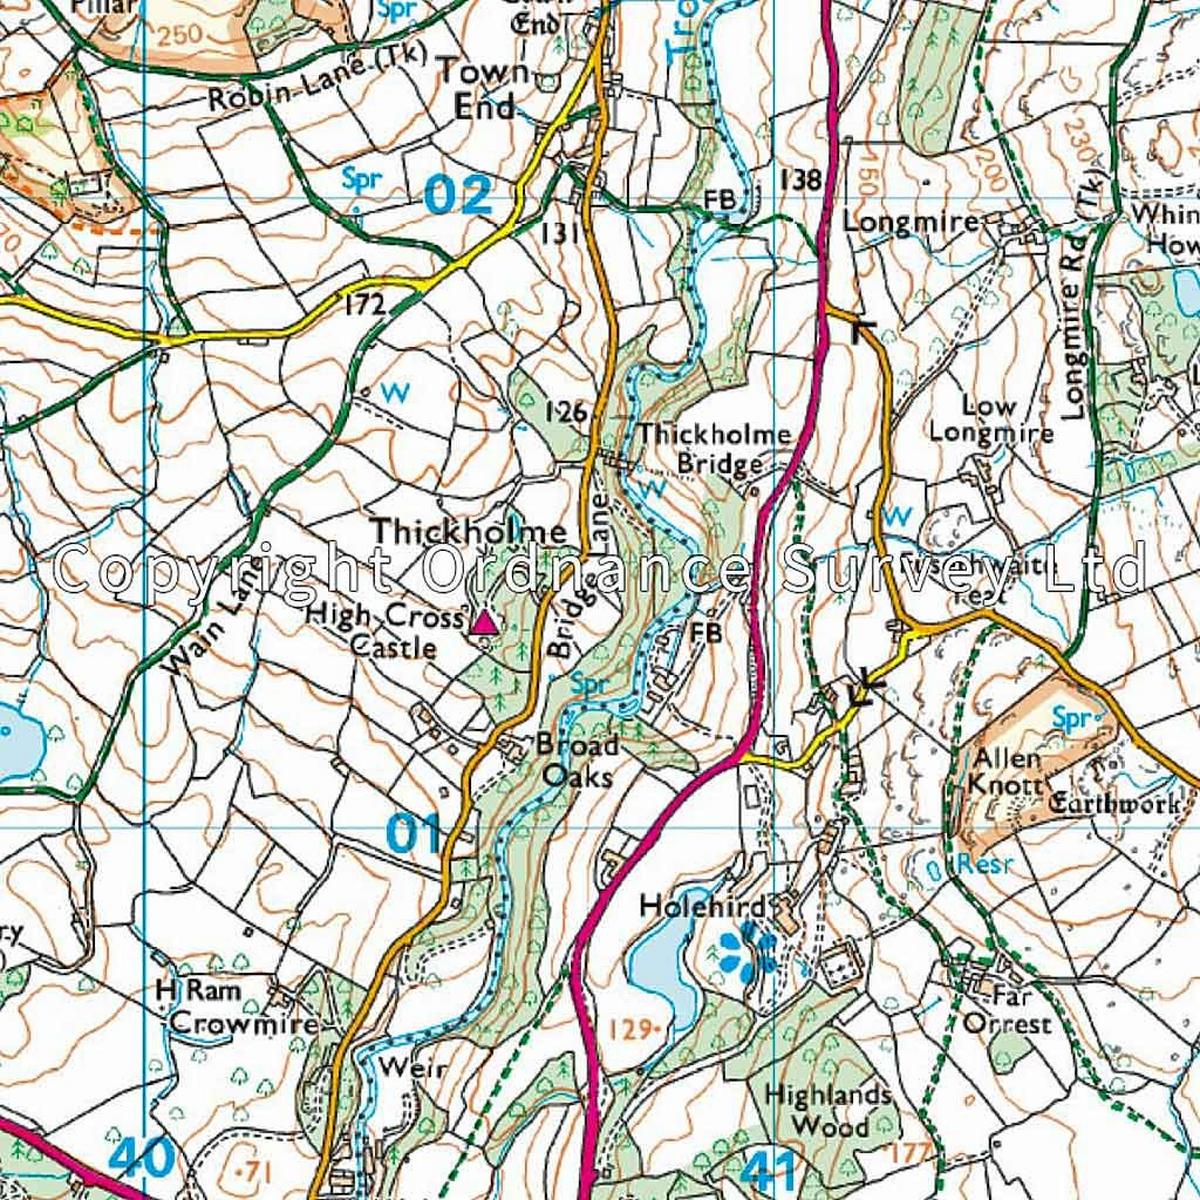 Ordnance Survey OS Explorer ACTIVE Map OL7 The English Lakes - South Eastern